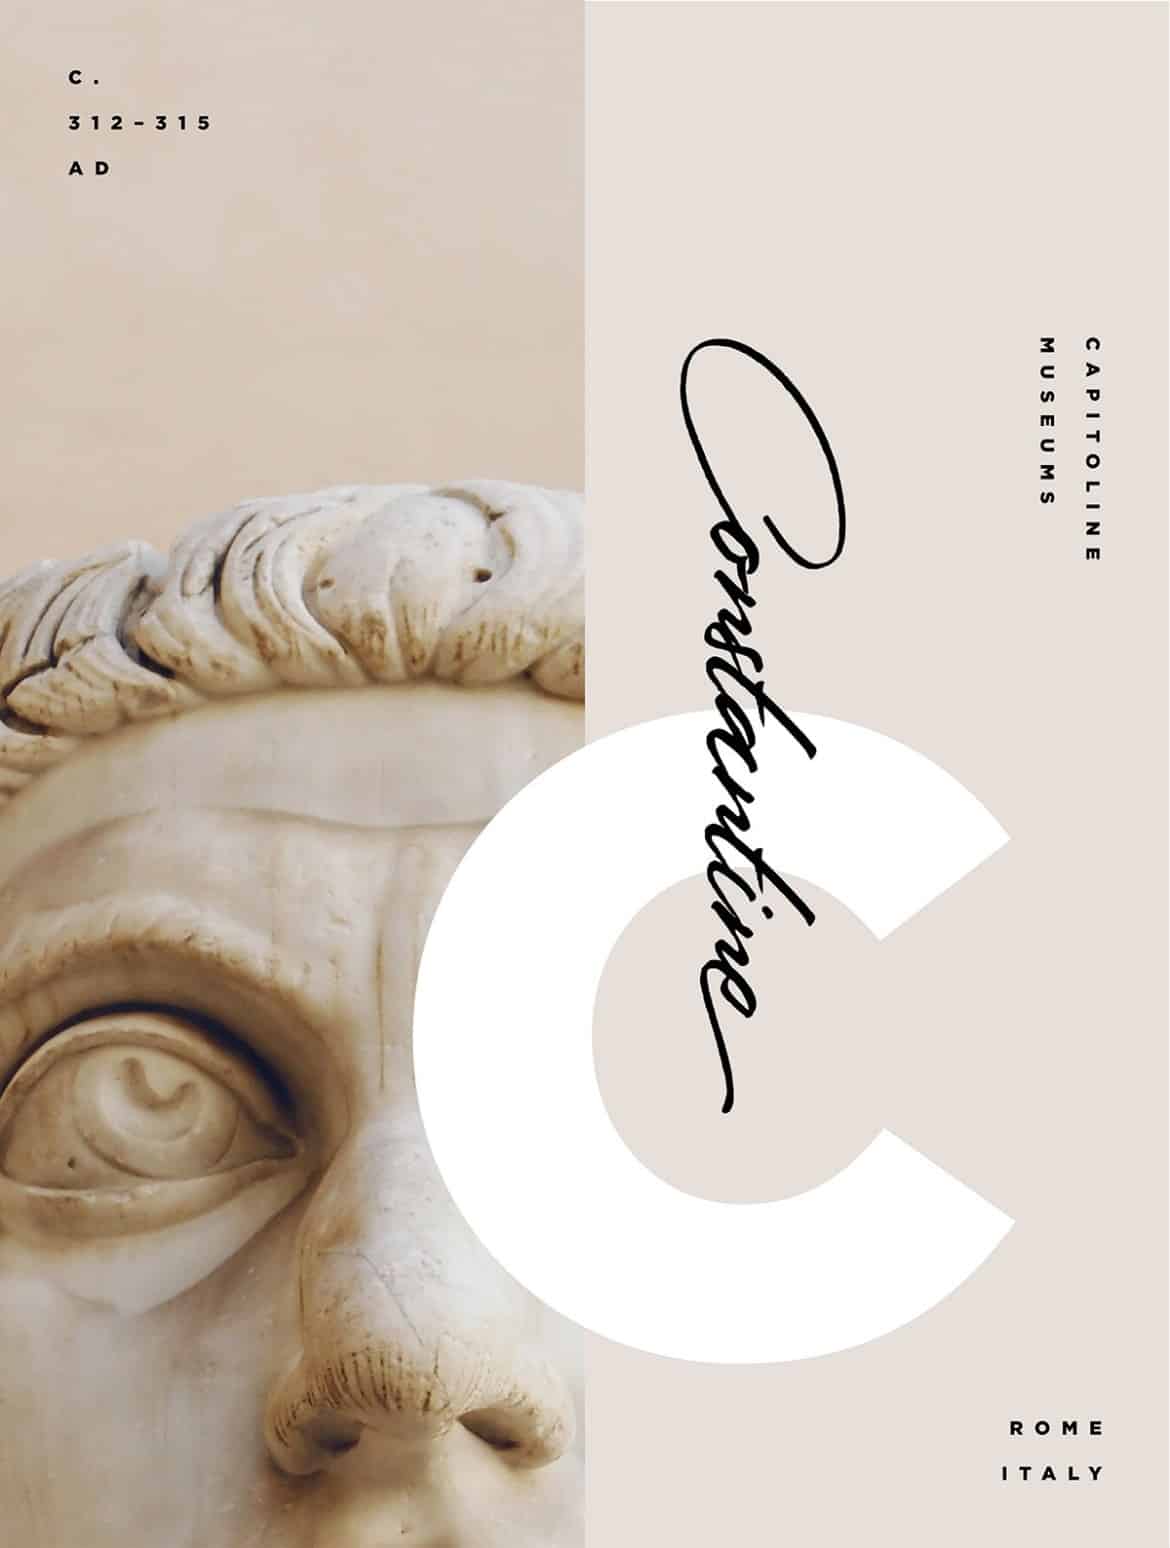 Graphic Design | Art Appreciation: Colossus of Constantine | Nubby Twiglet